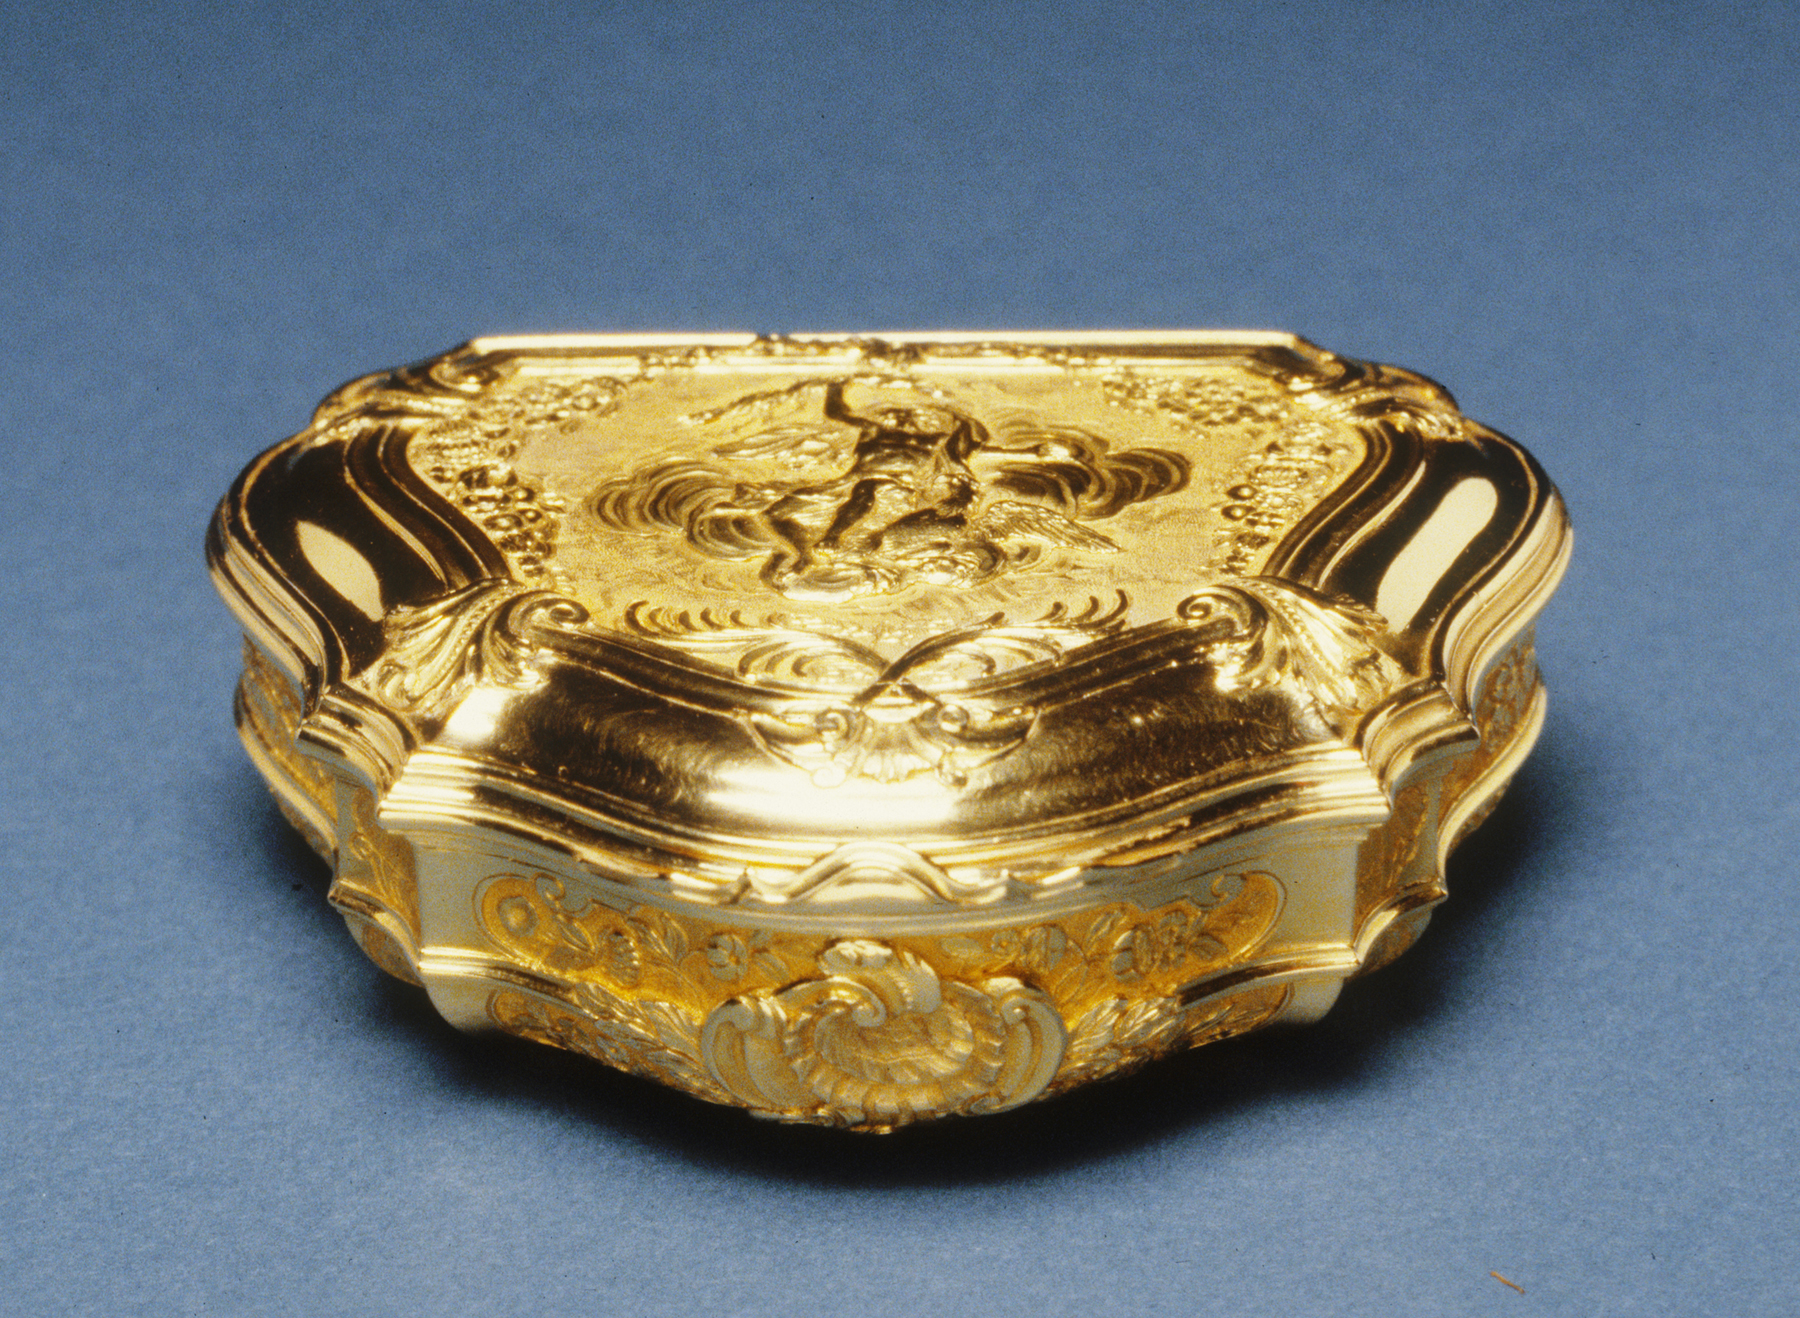 File:English - Cartouche-Shaped Snuffbox with Jupiter - Walters 5722.jpg - Wikimedia Commons